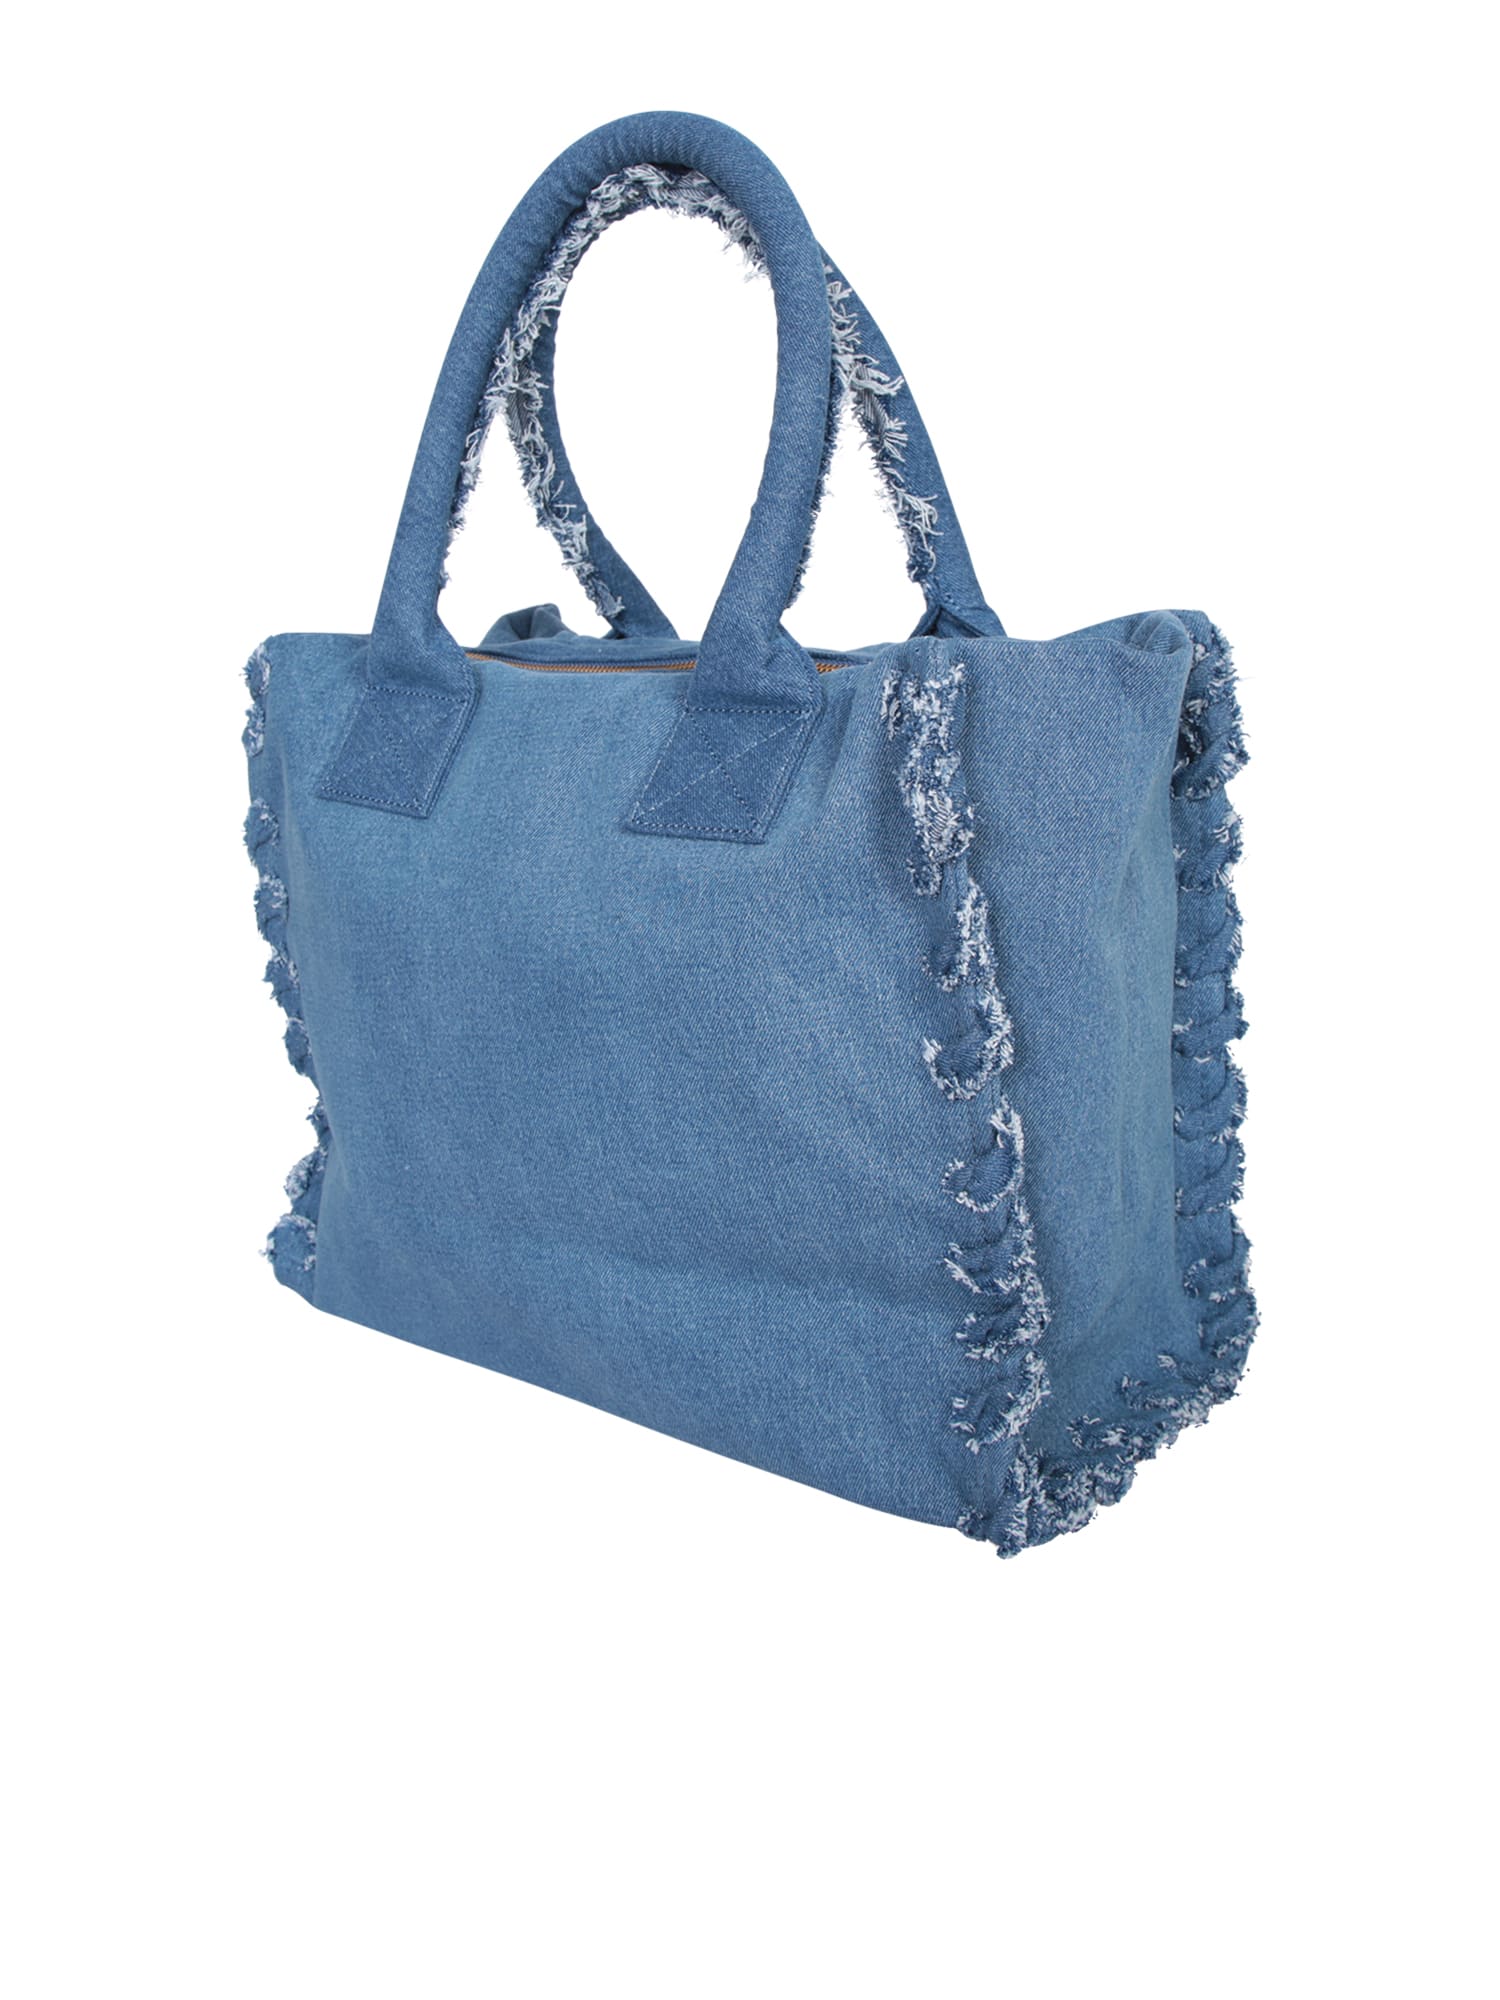 Shop Pinko Blue Denim Beach Shopping Bag